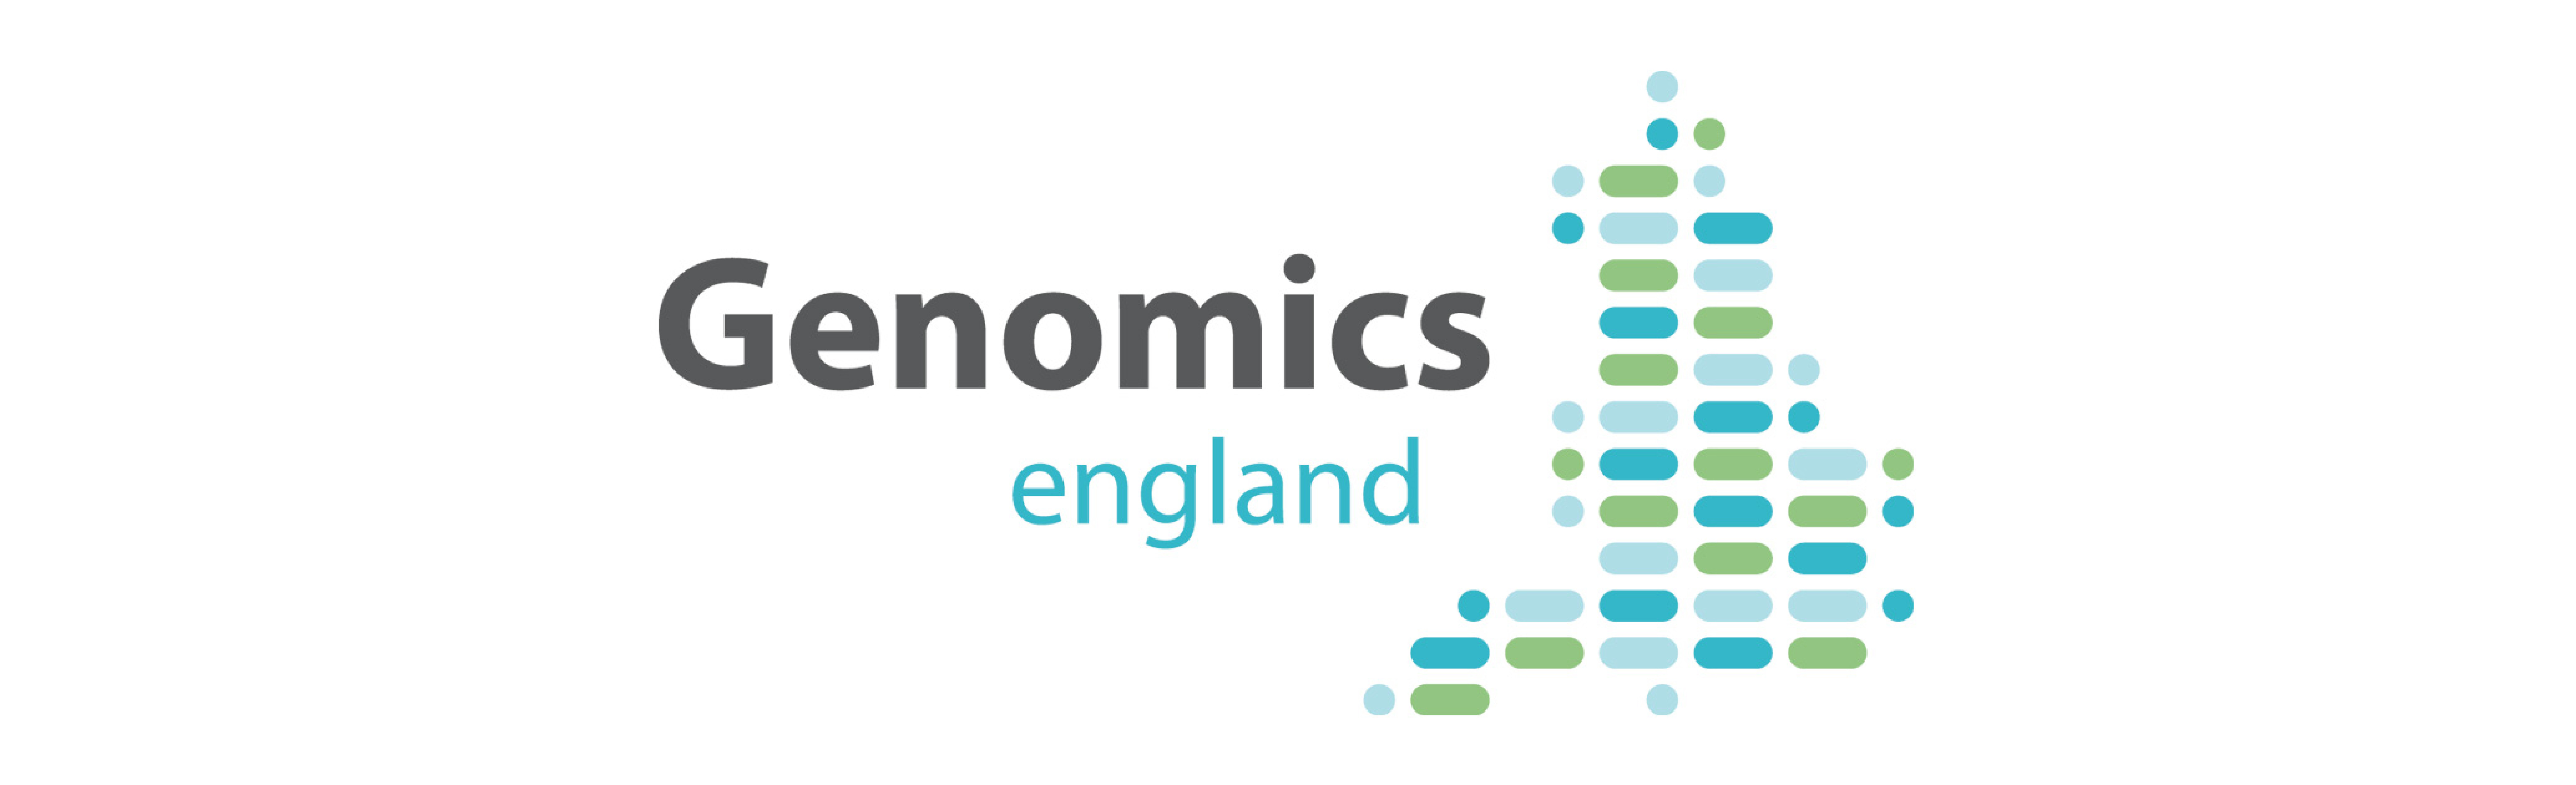 genomics england research environment